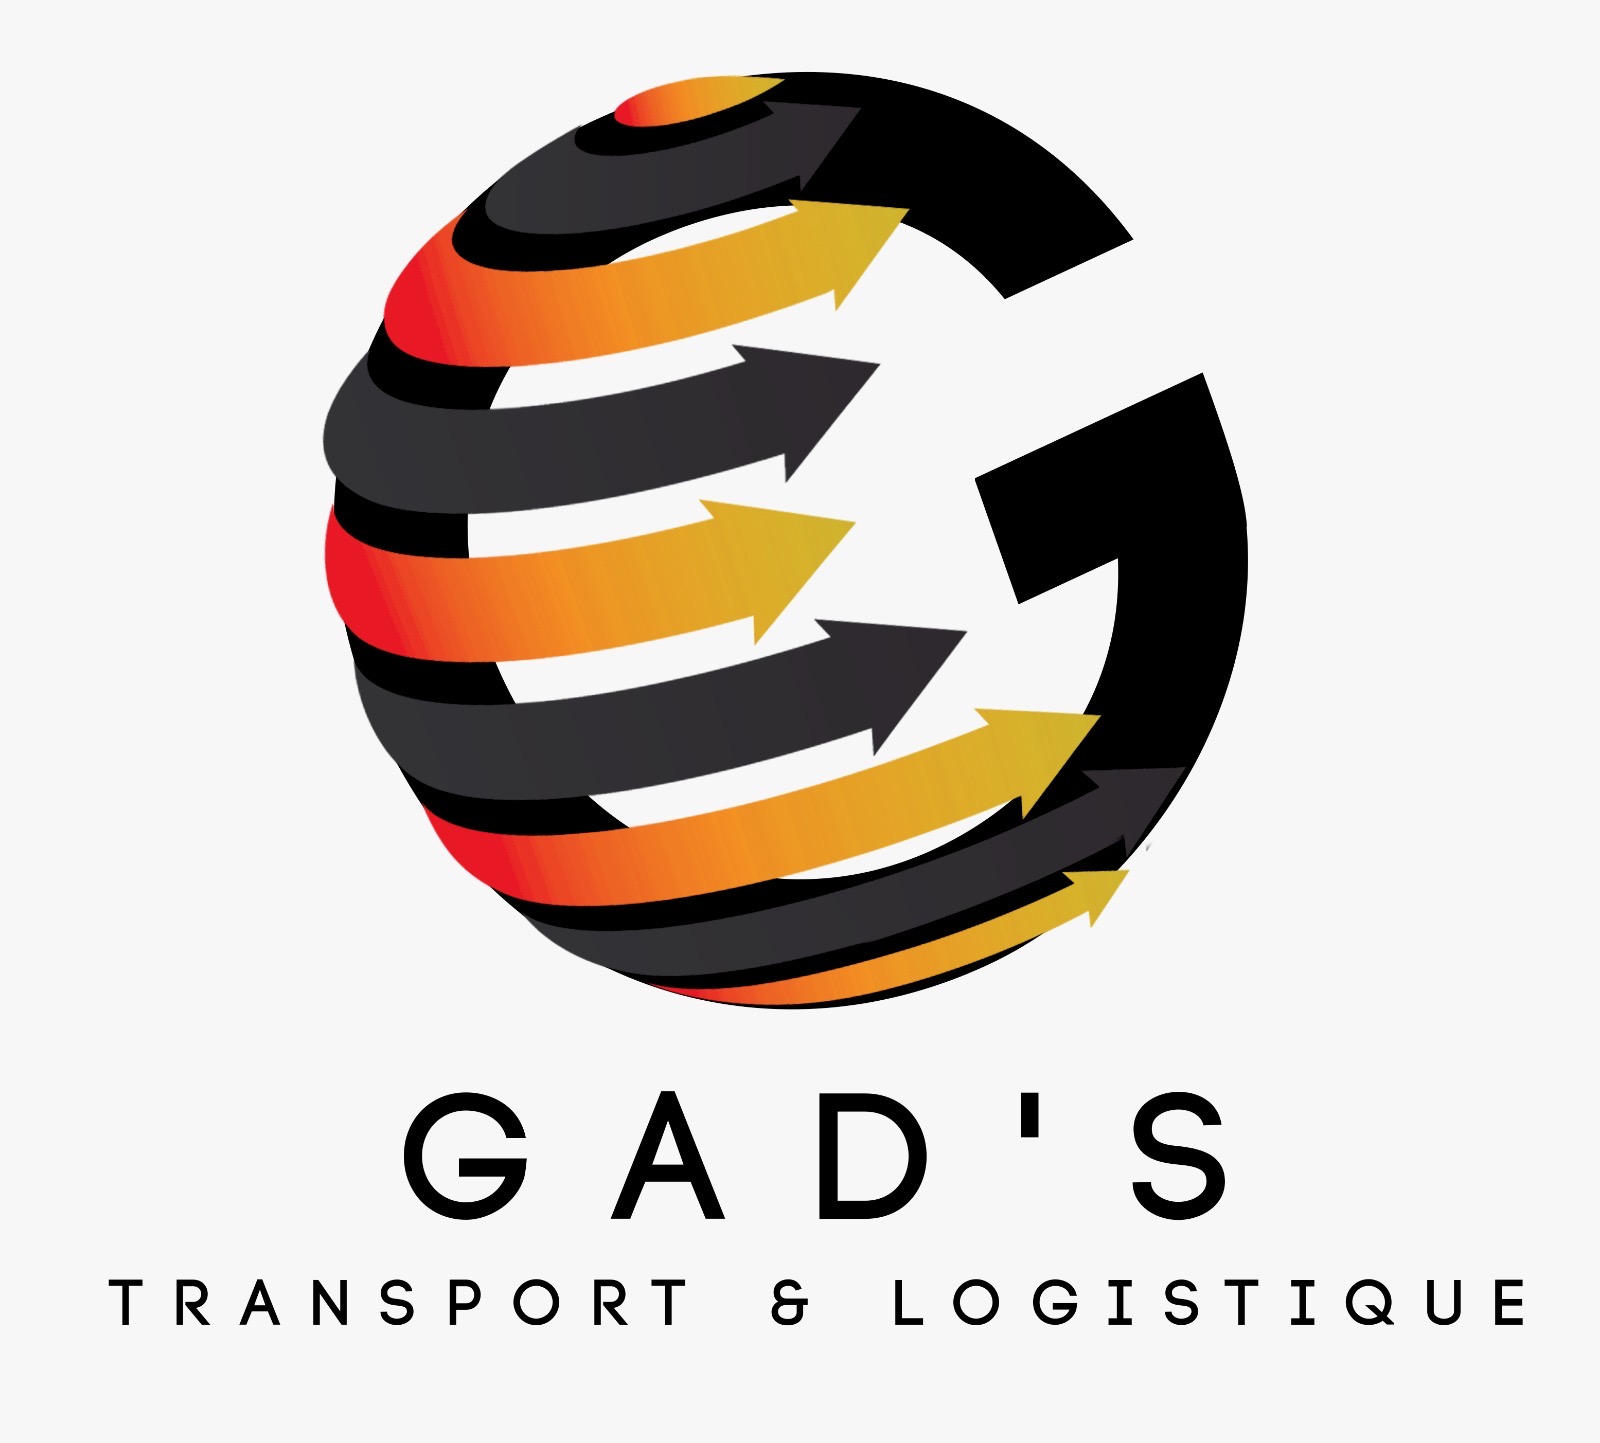 GAD’S TRANSPORT